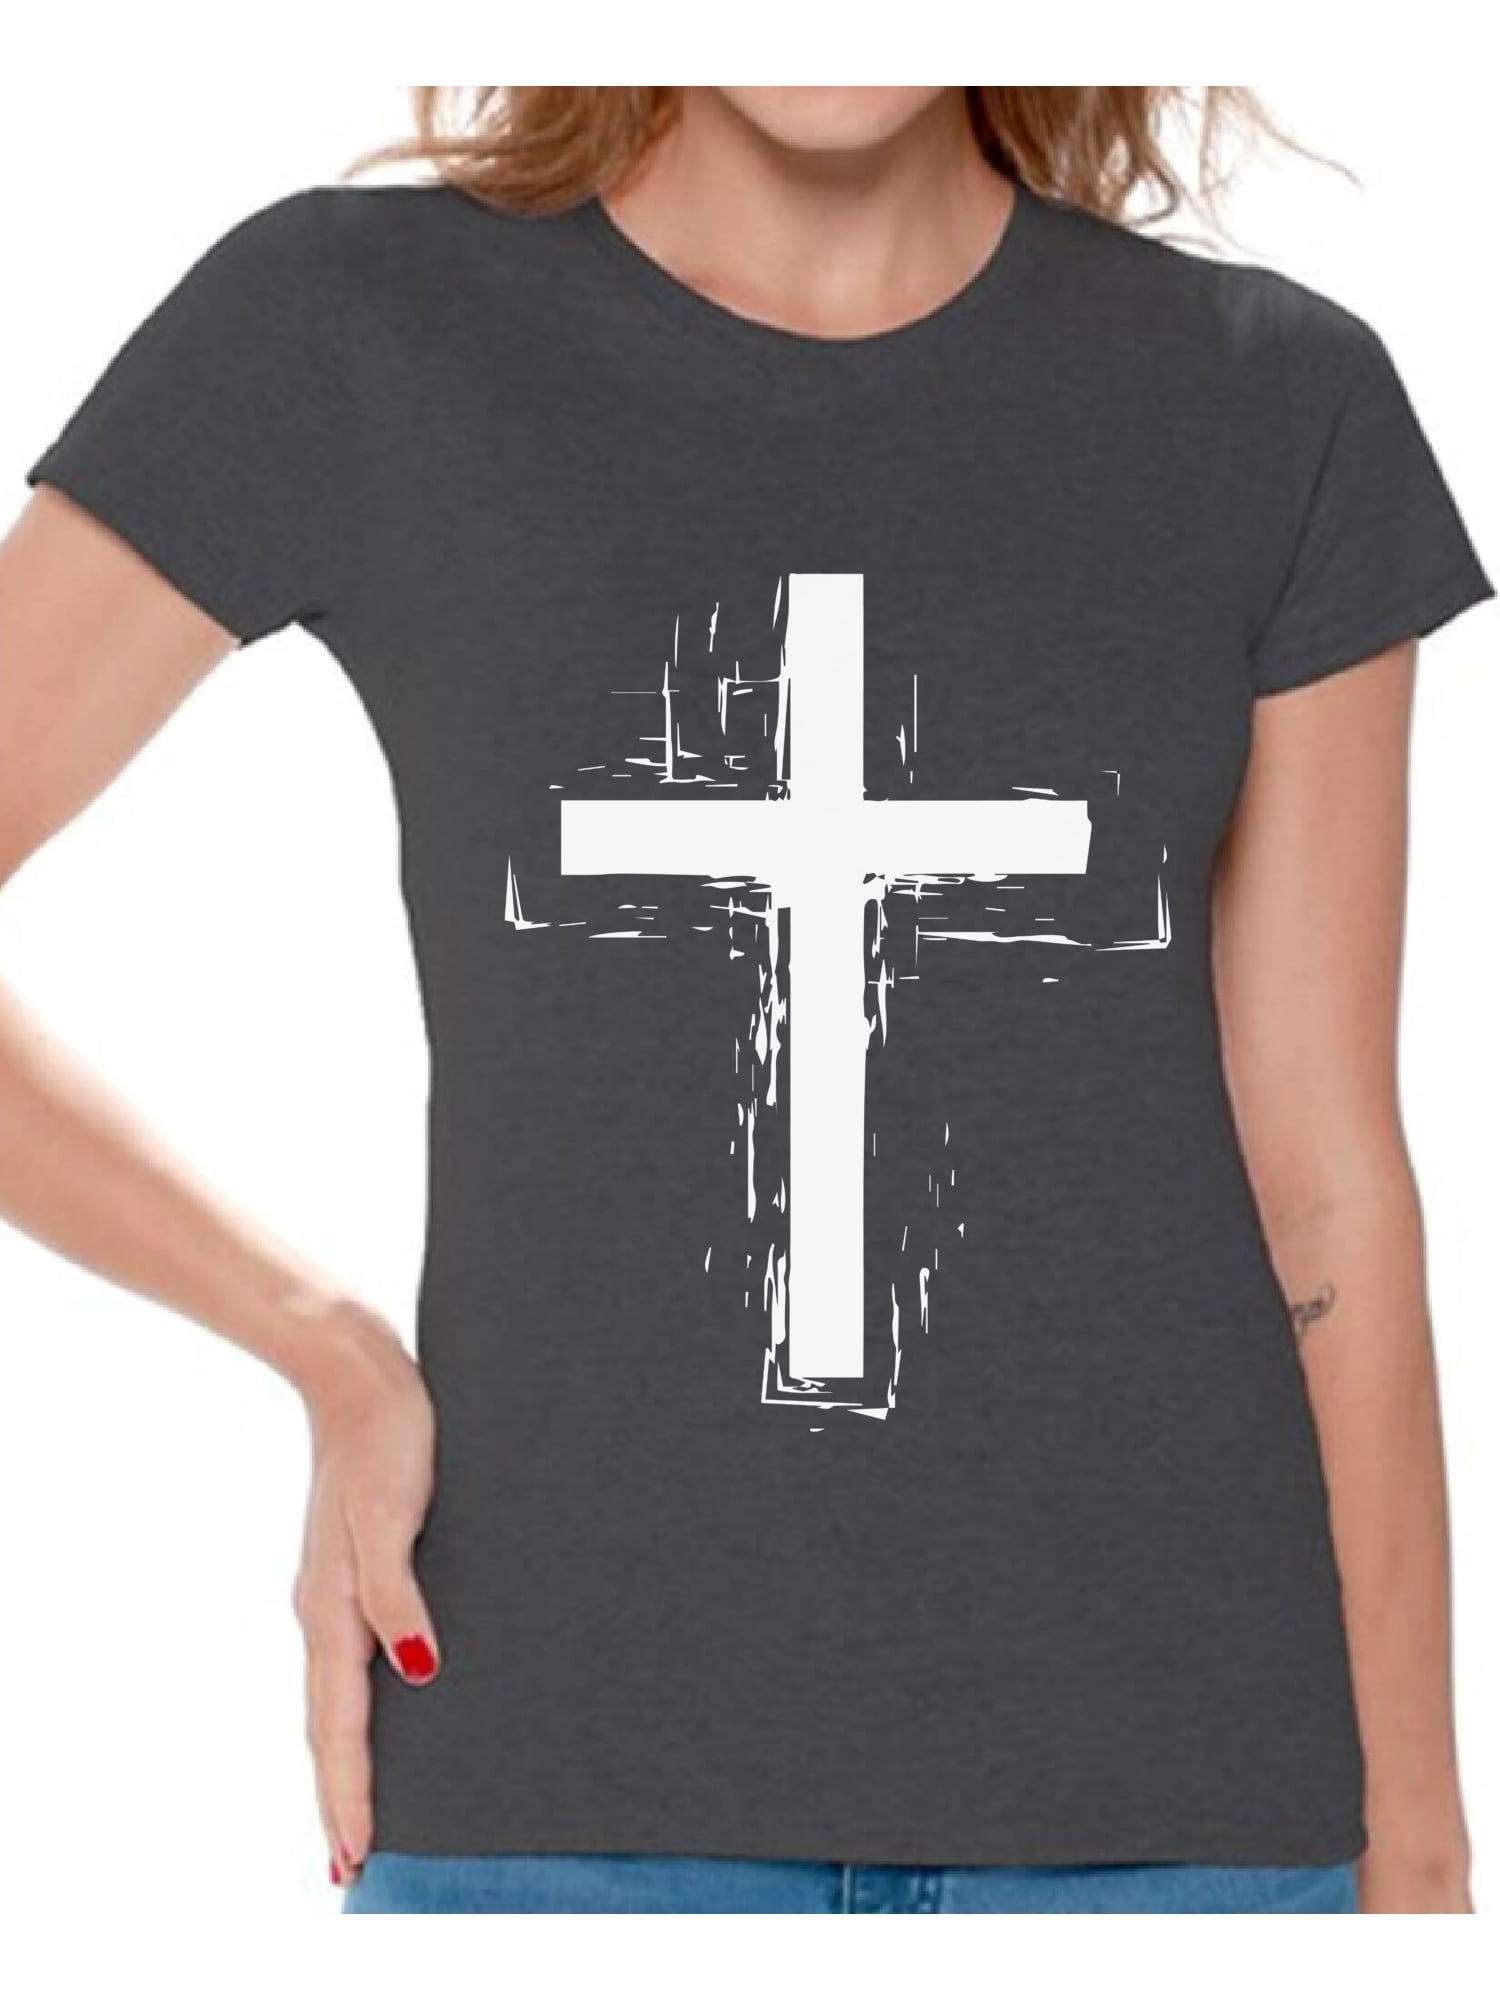 Awkward Styles - Awkward Styles Cross T Shirt for Women Christian Cross ...